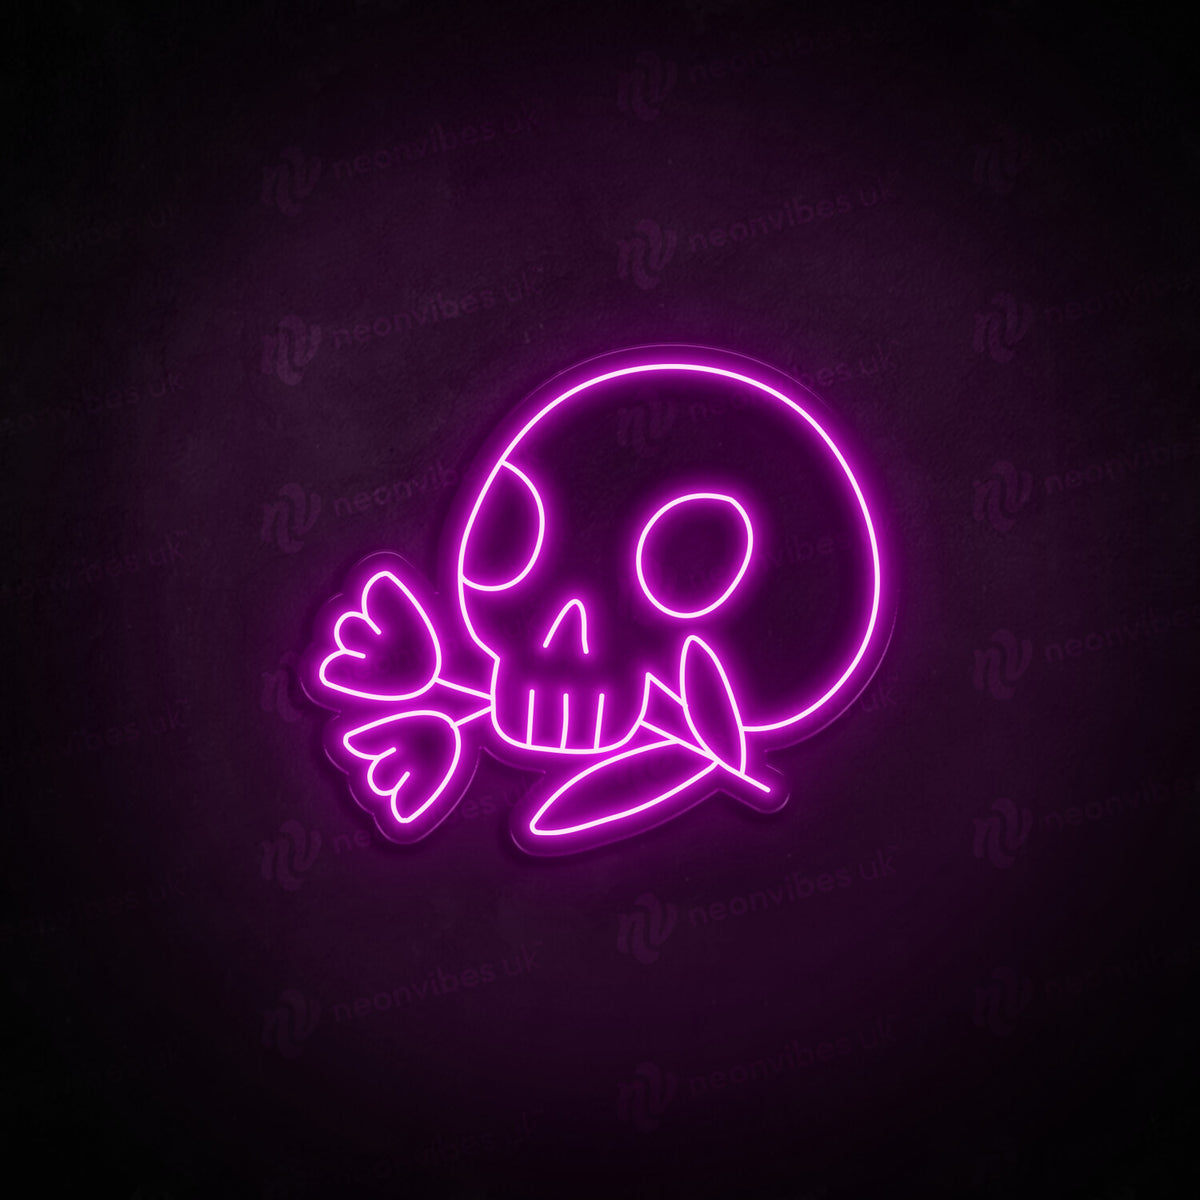 Skull neon sign